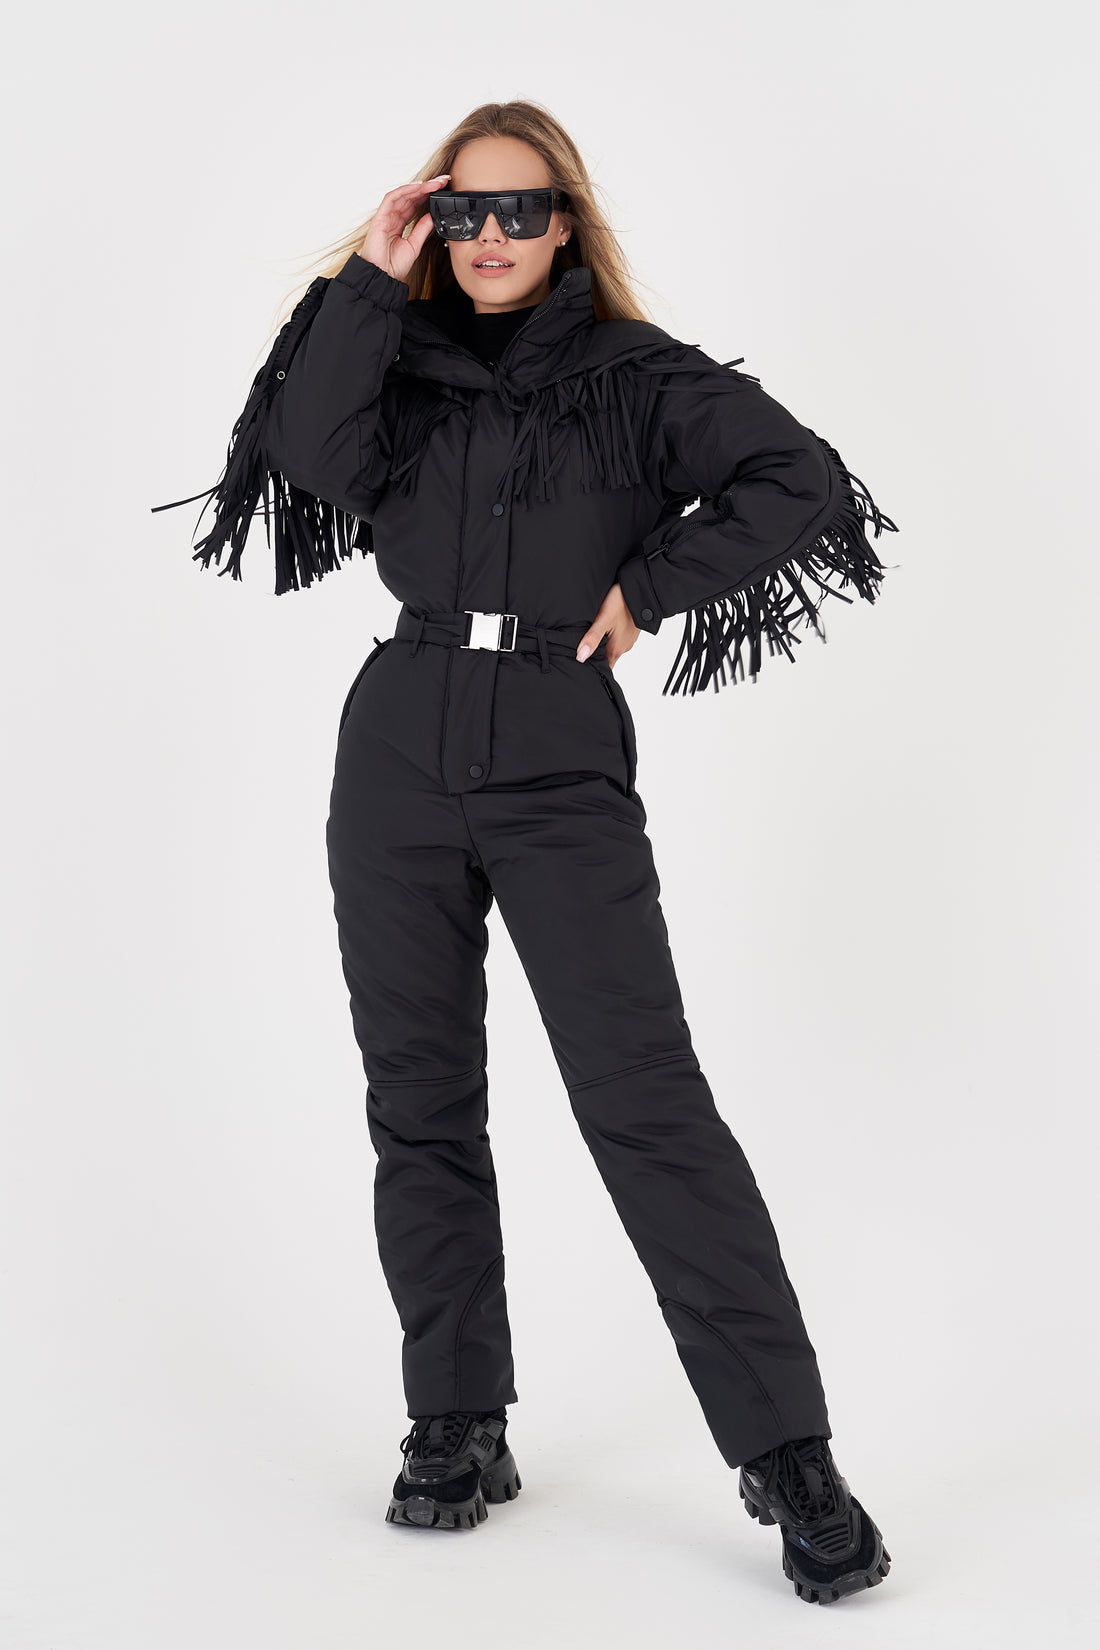 Black ski suit BONA - BLACK fringe - Waterproof membrana with tassels